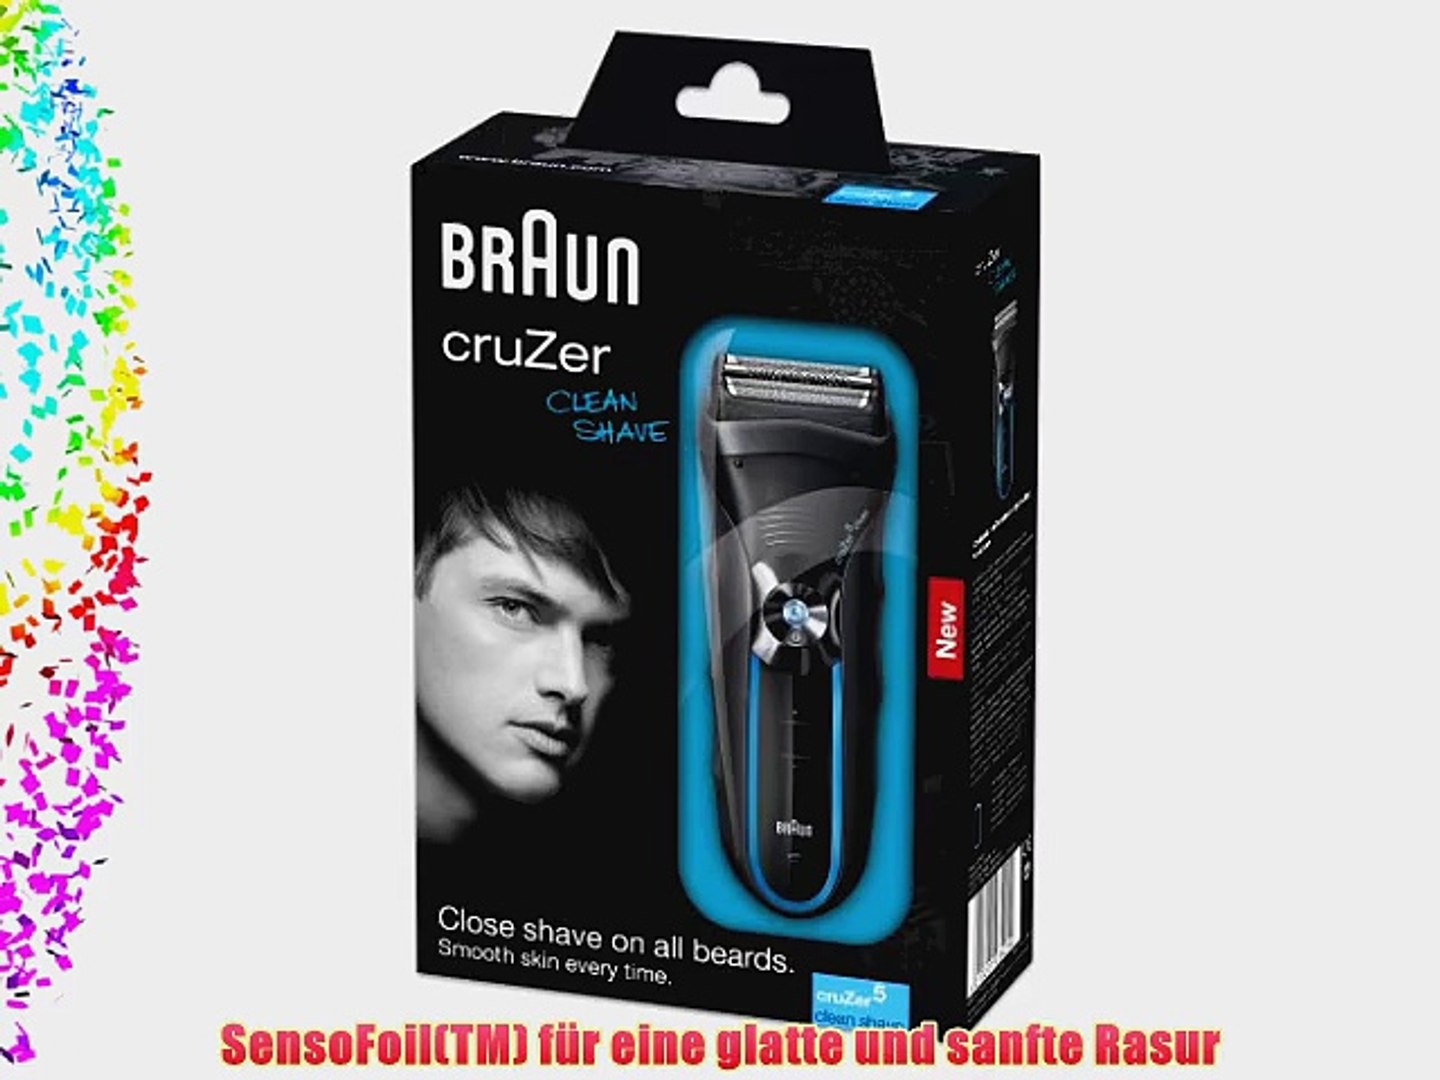 Braun Oral-B CruZer 5 Clean Shave Rasierer - video Dailymotion